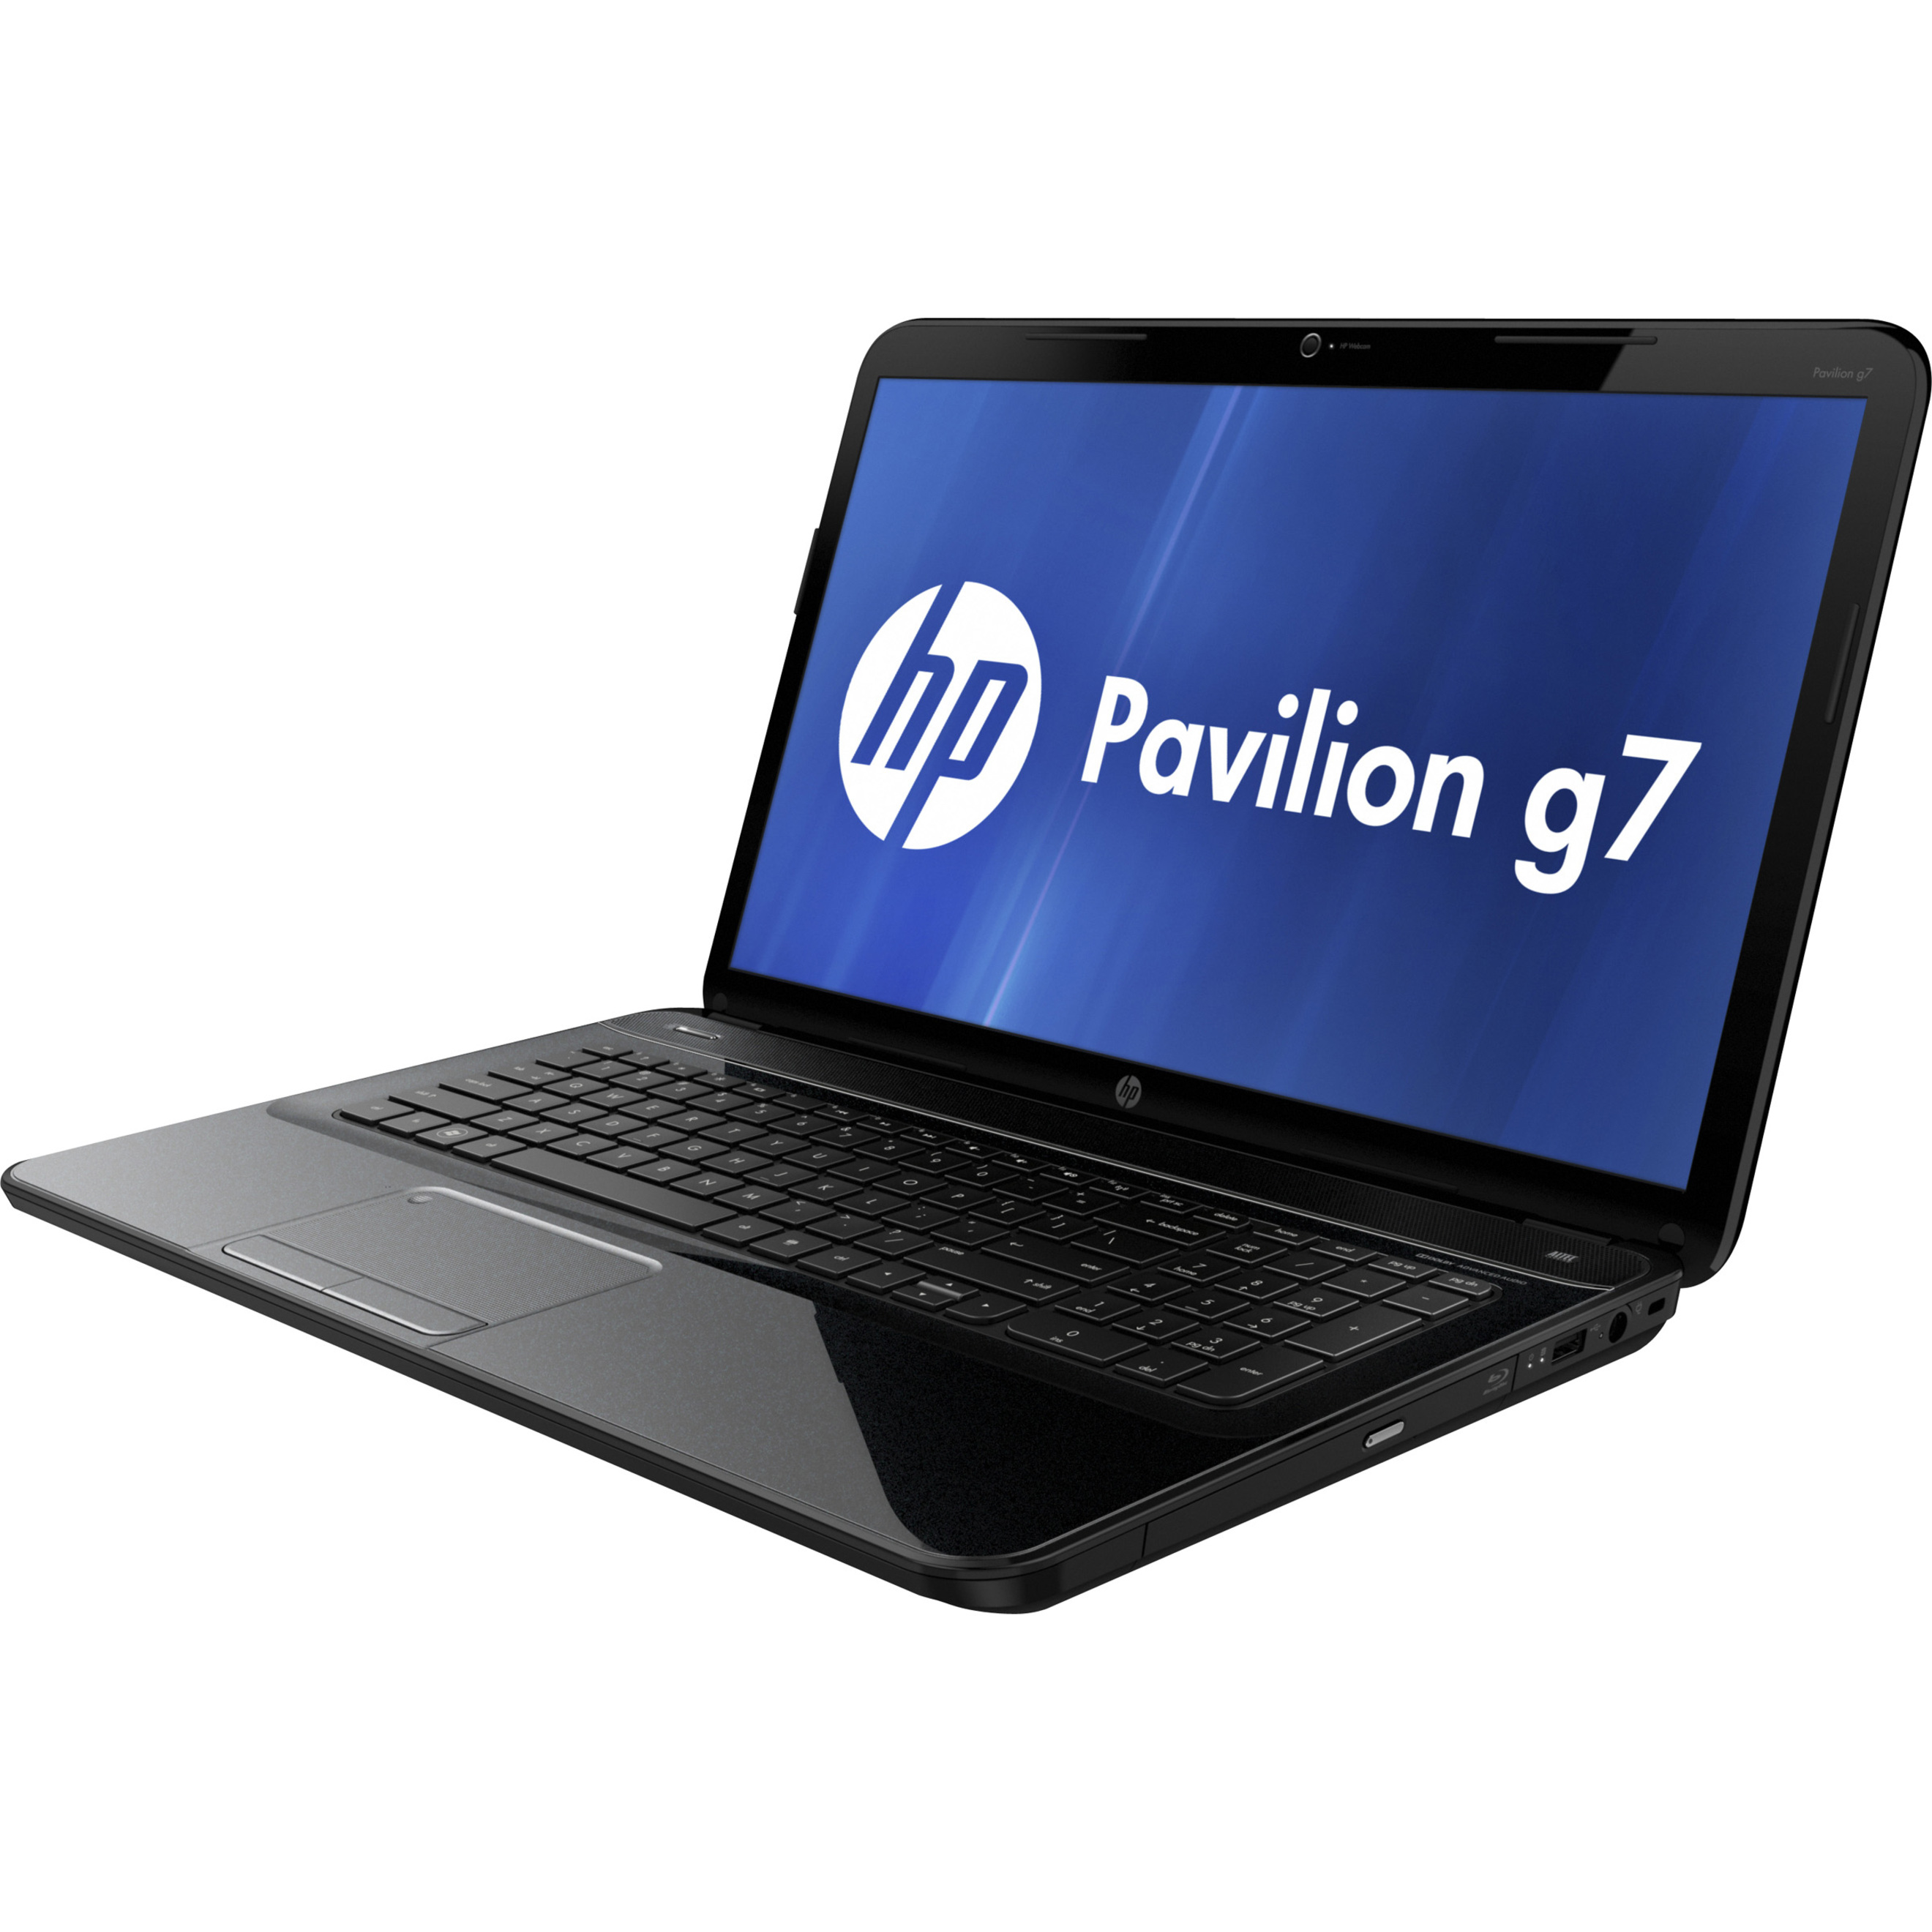 HP Pavilion 17.3" Laptop, AMD A-Series A8-4500M, 500GB HD, DVD Writer, Windows 8, g7-2269wm - image 2 of 6